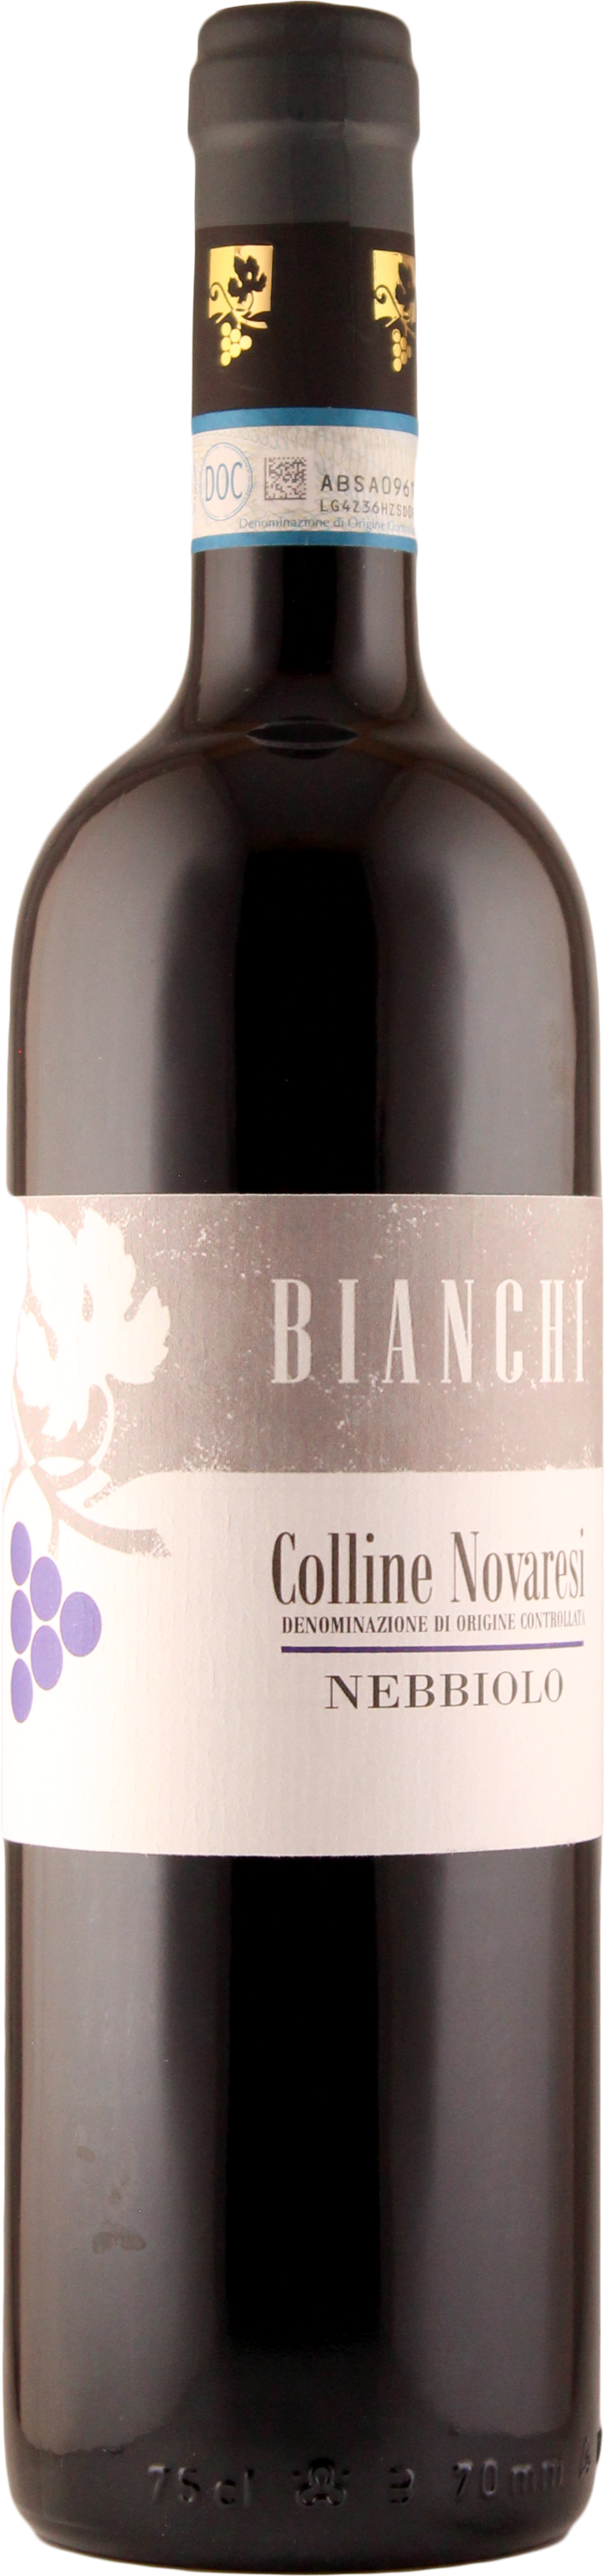 Colline Novaresi Nebbiolo 2020 - Bianchi/Piemont